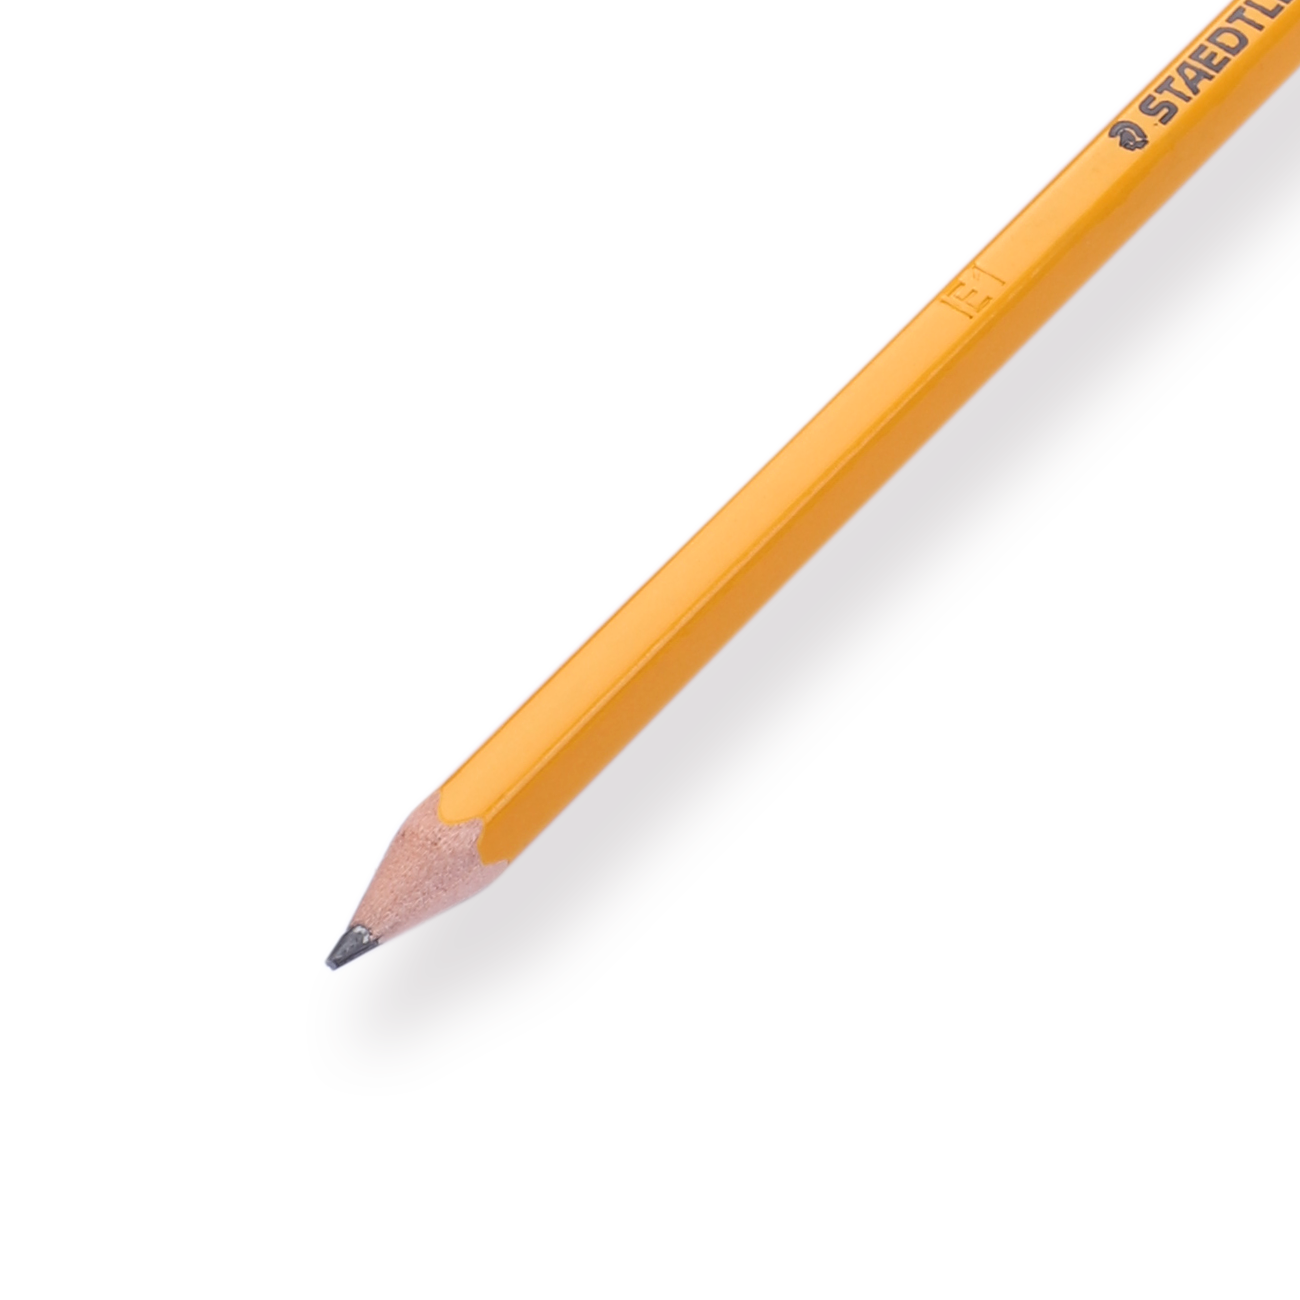 Faber-Castell Castell 9000 2B pencil – Scribe Market